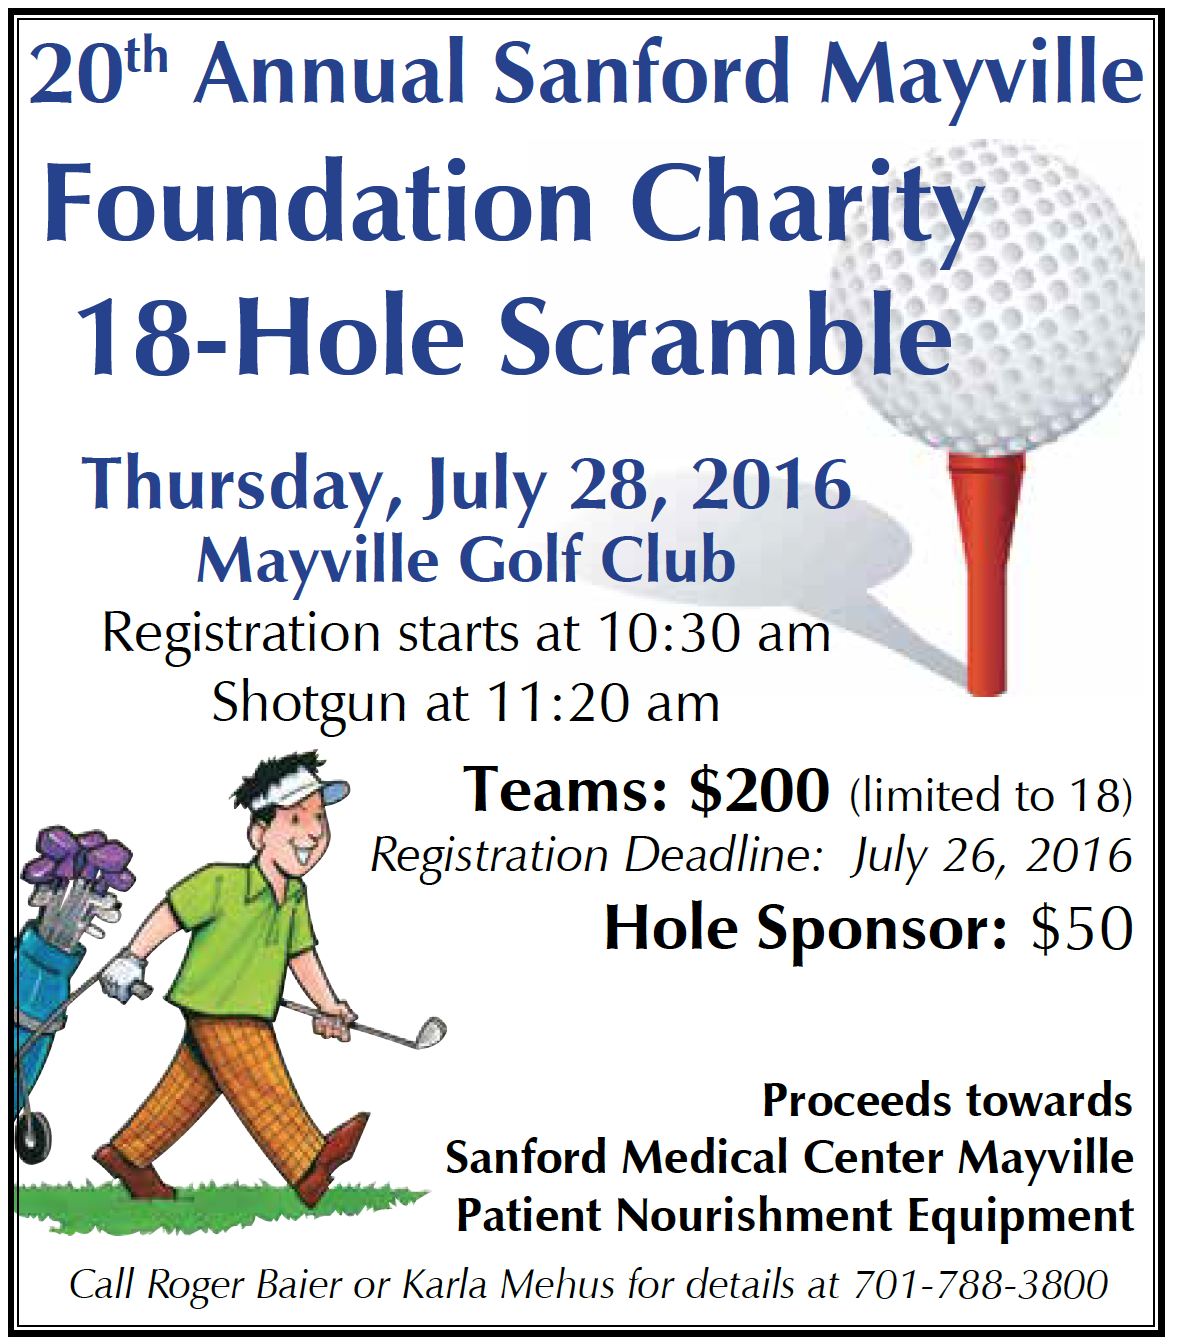 20th Annual Sanford Mayville Foundation Charity 18-Hole Scramble @ Mayville Golf Club